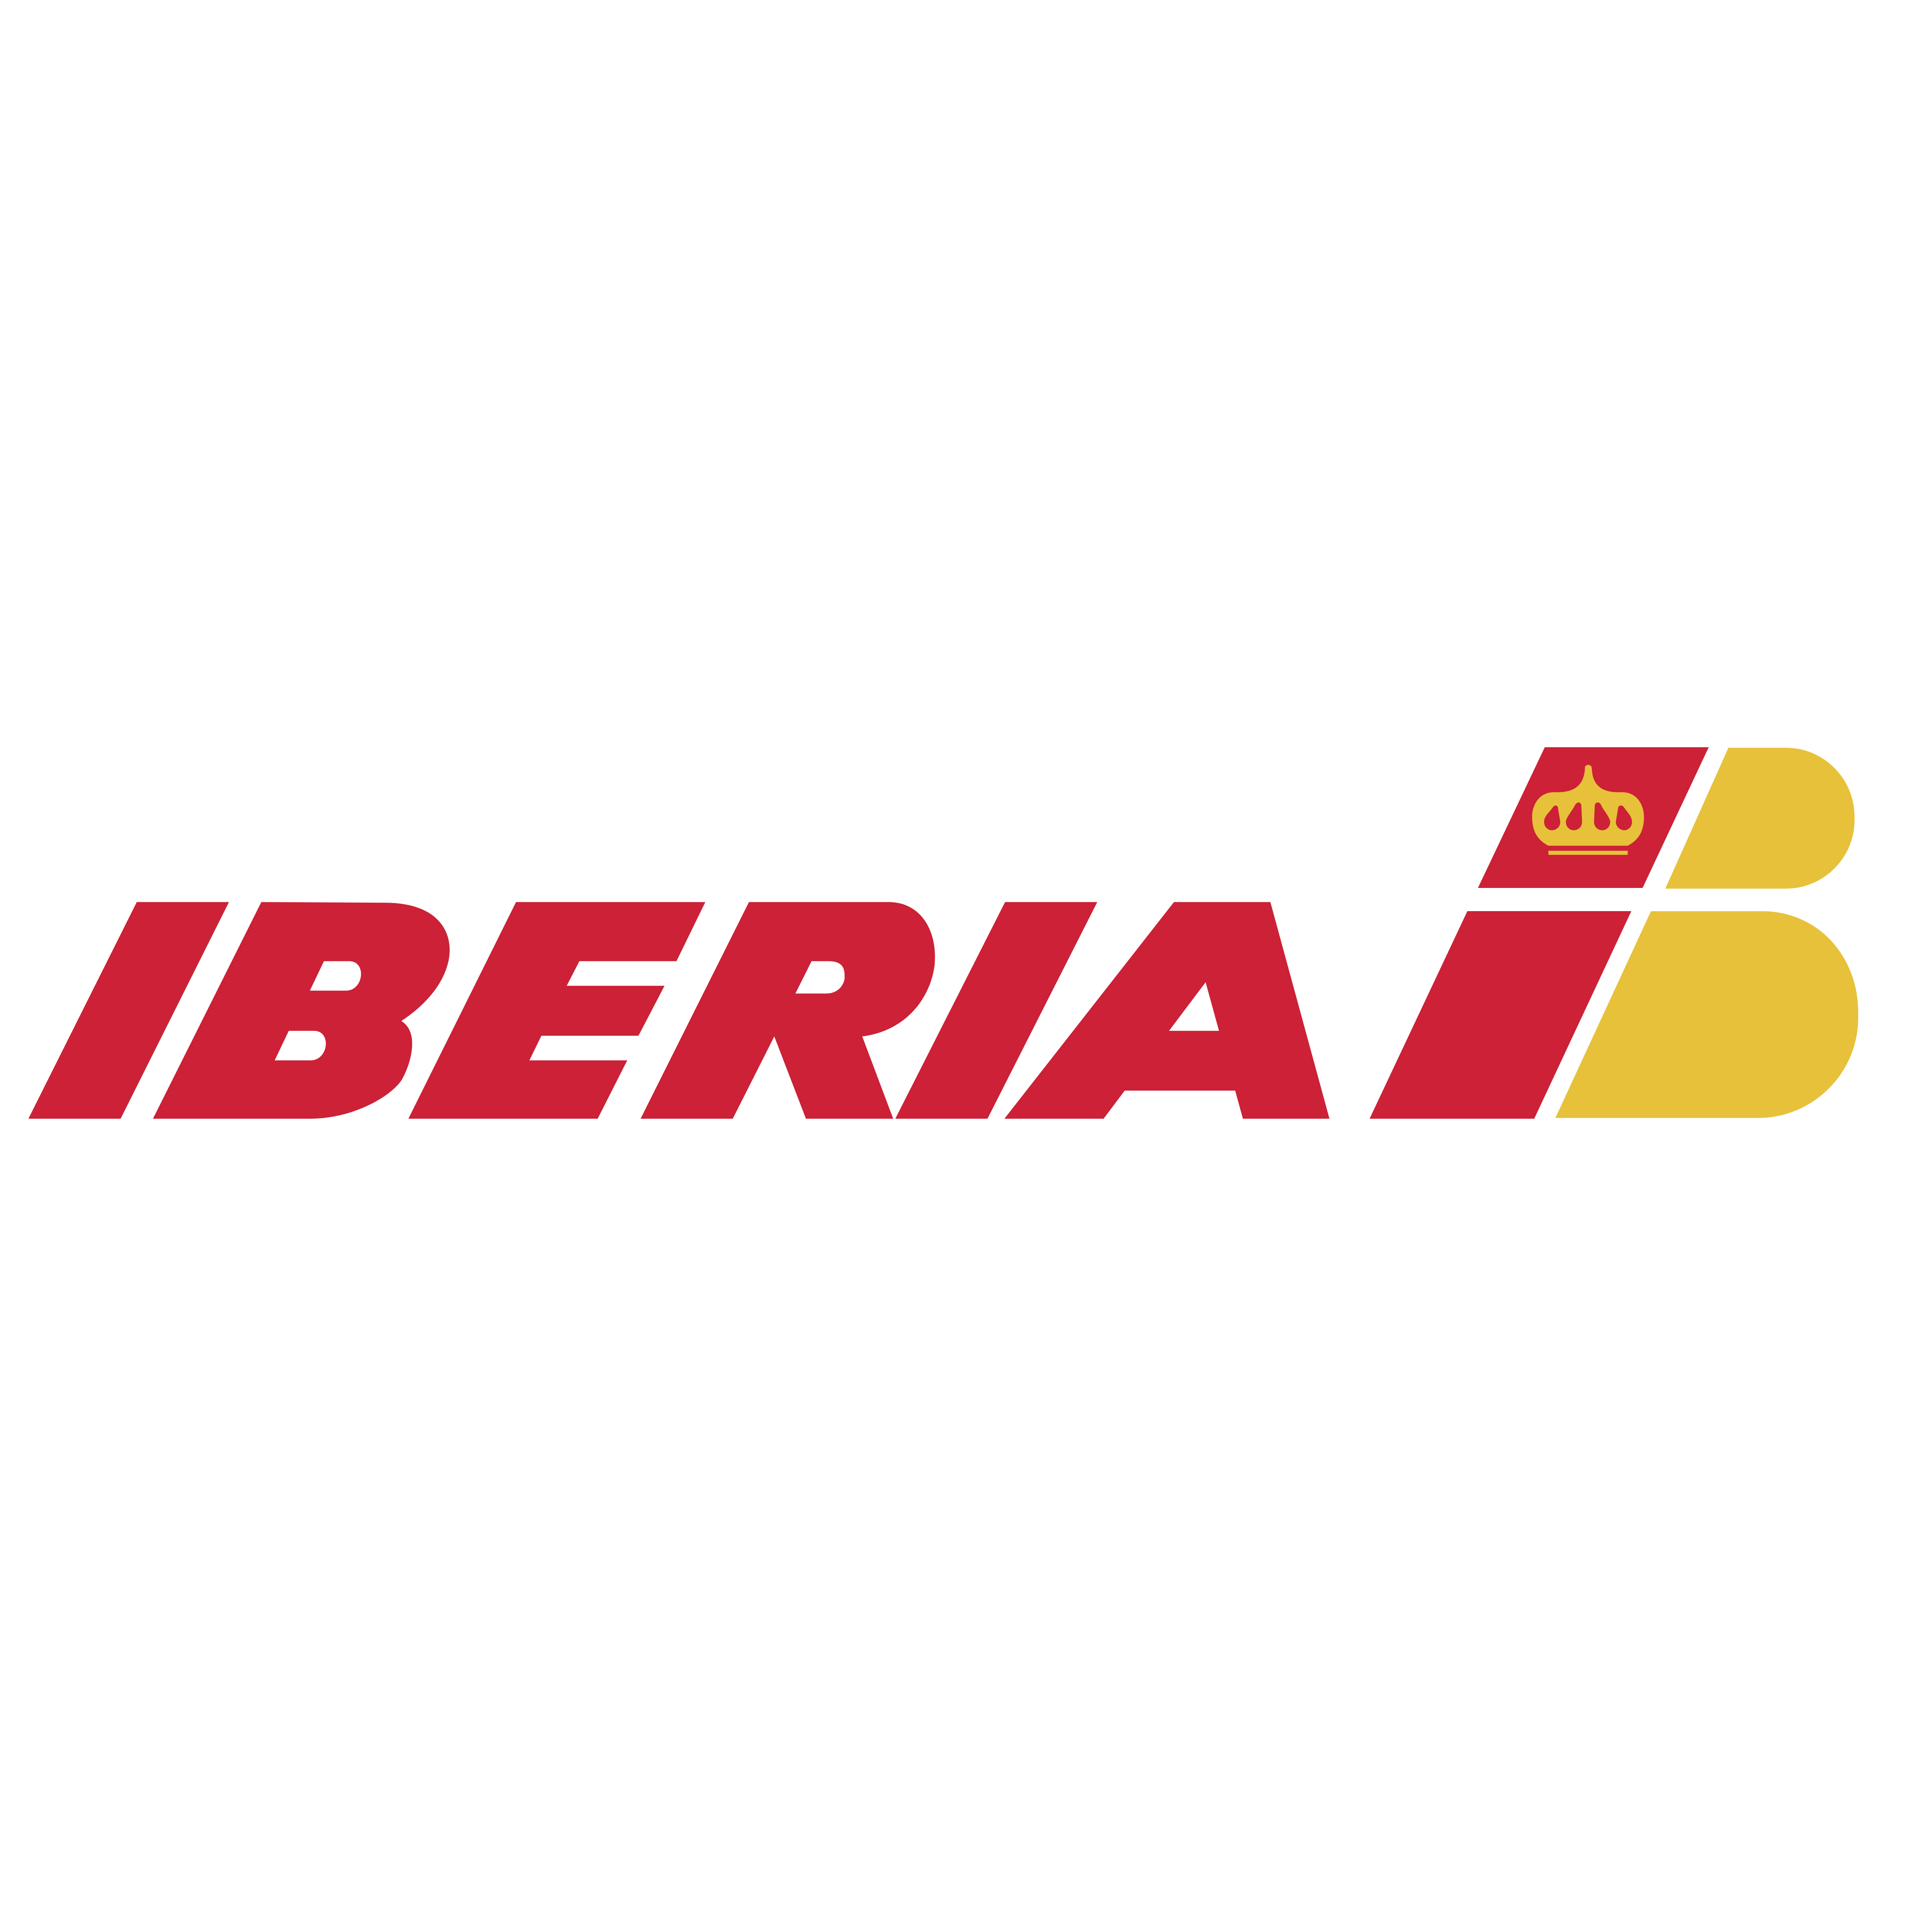 Iberia Logo - Iberia Airlines – Logos Download